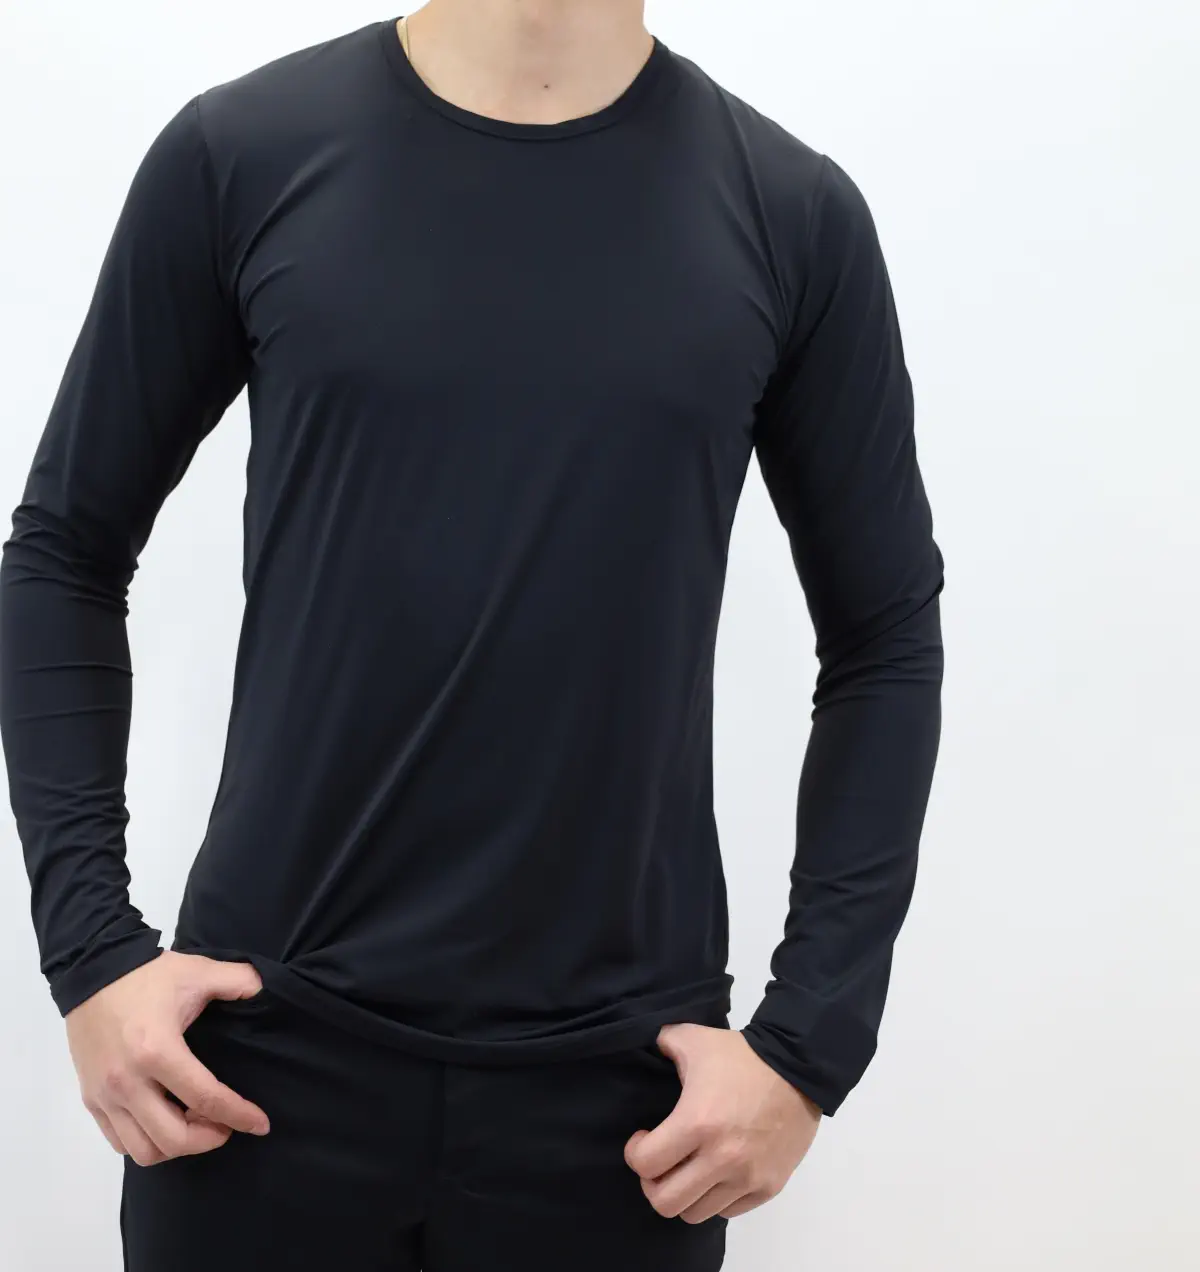 Kismet Men's Training Shirt Long Sleeve Todd UV Protection